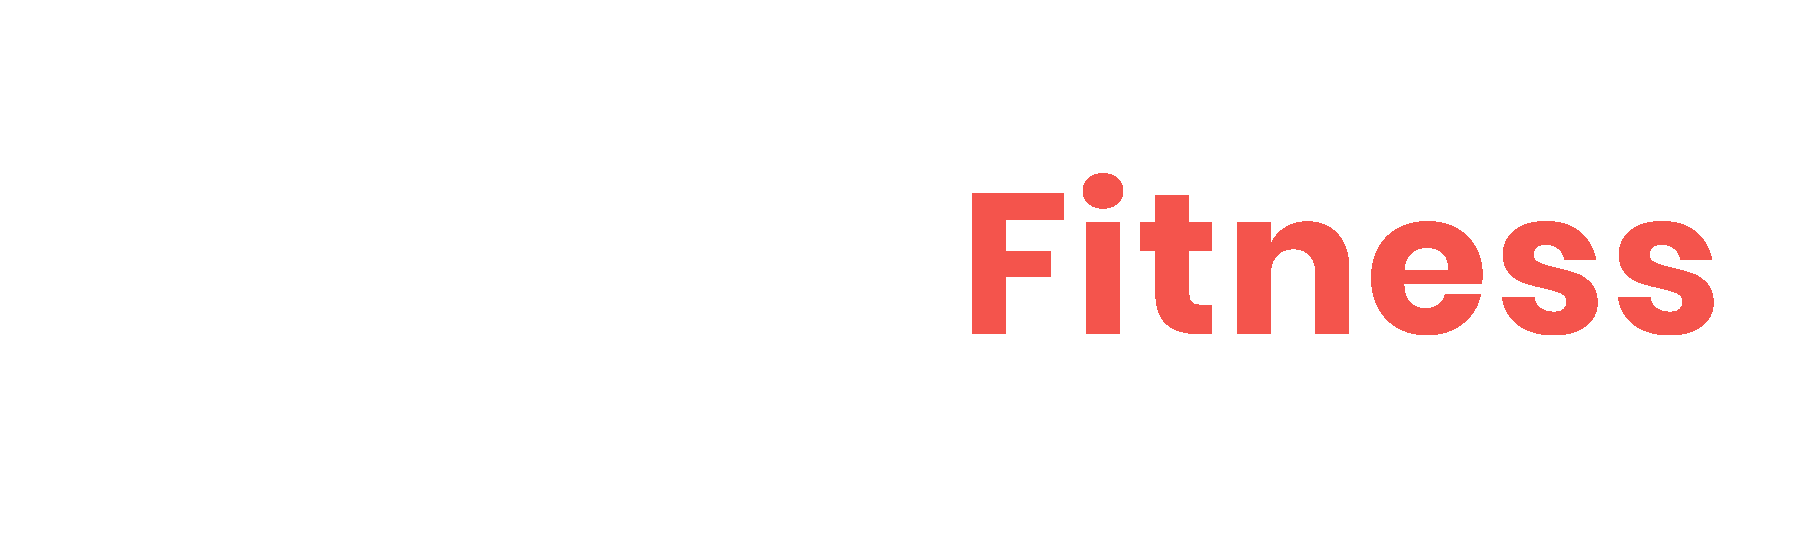 MadCity Fitness